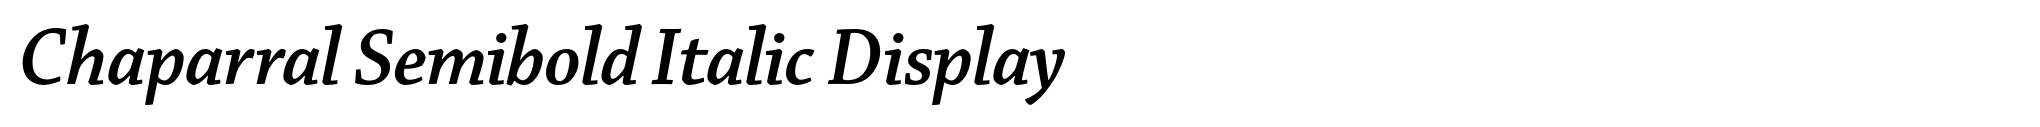 Chaparral Semibold Italic Display image